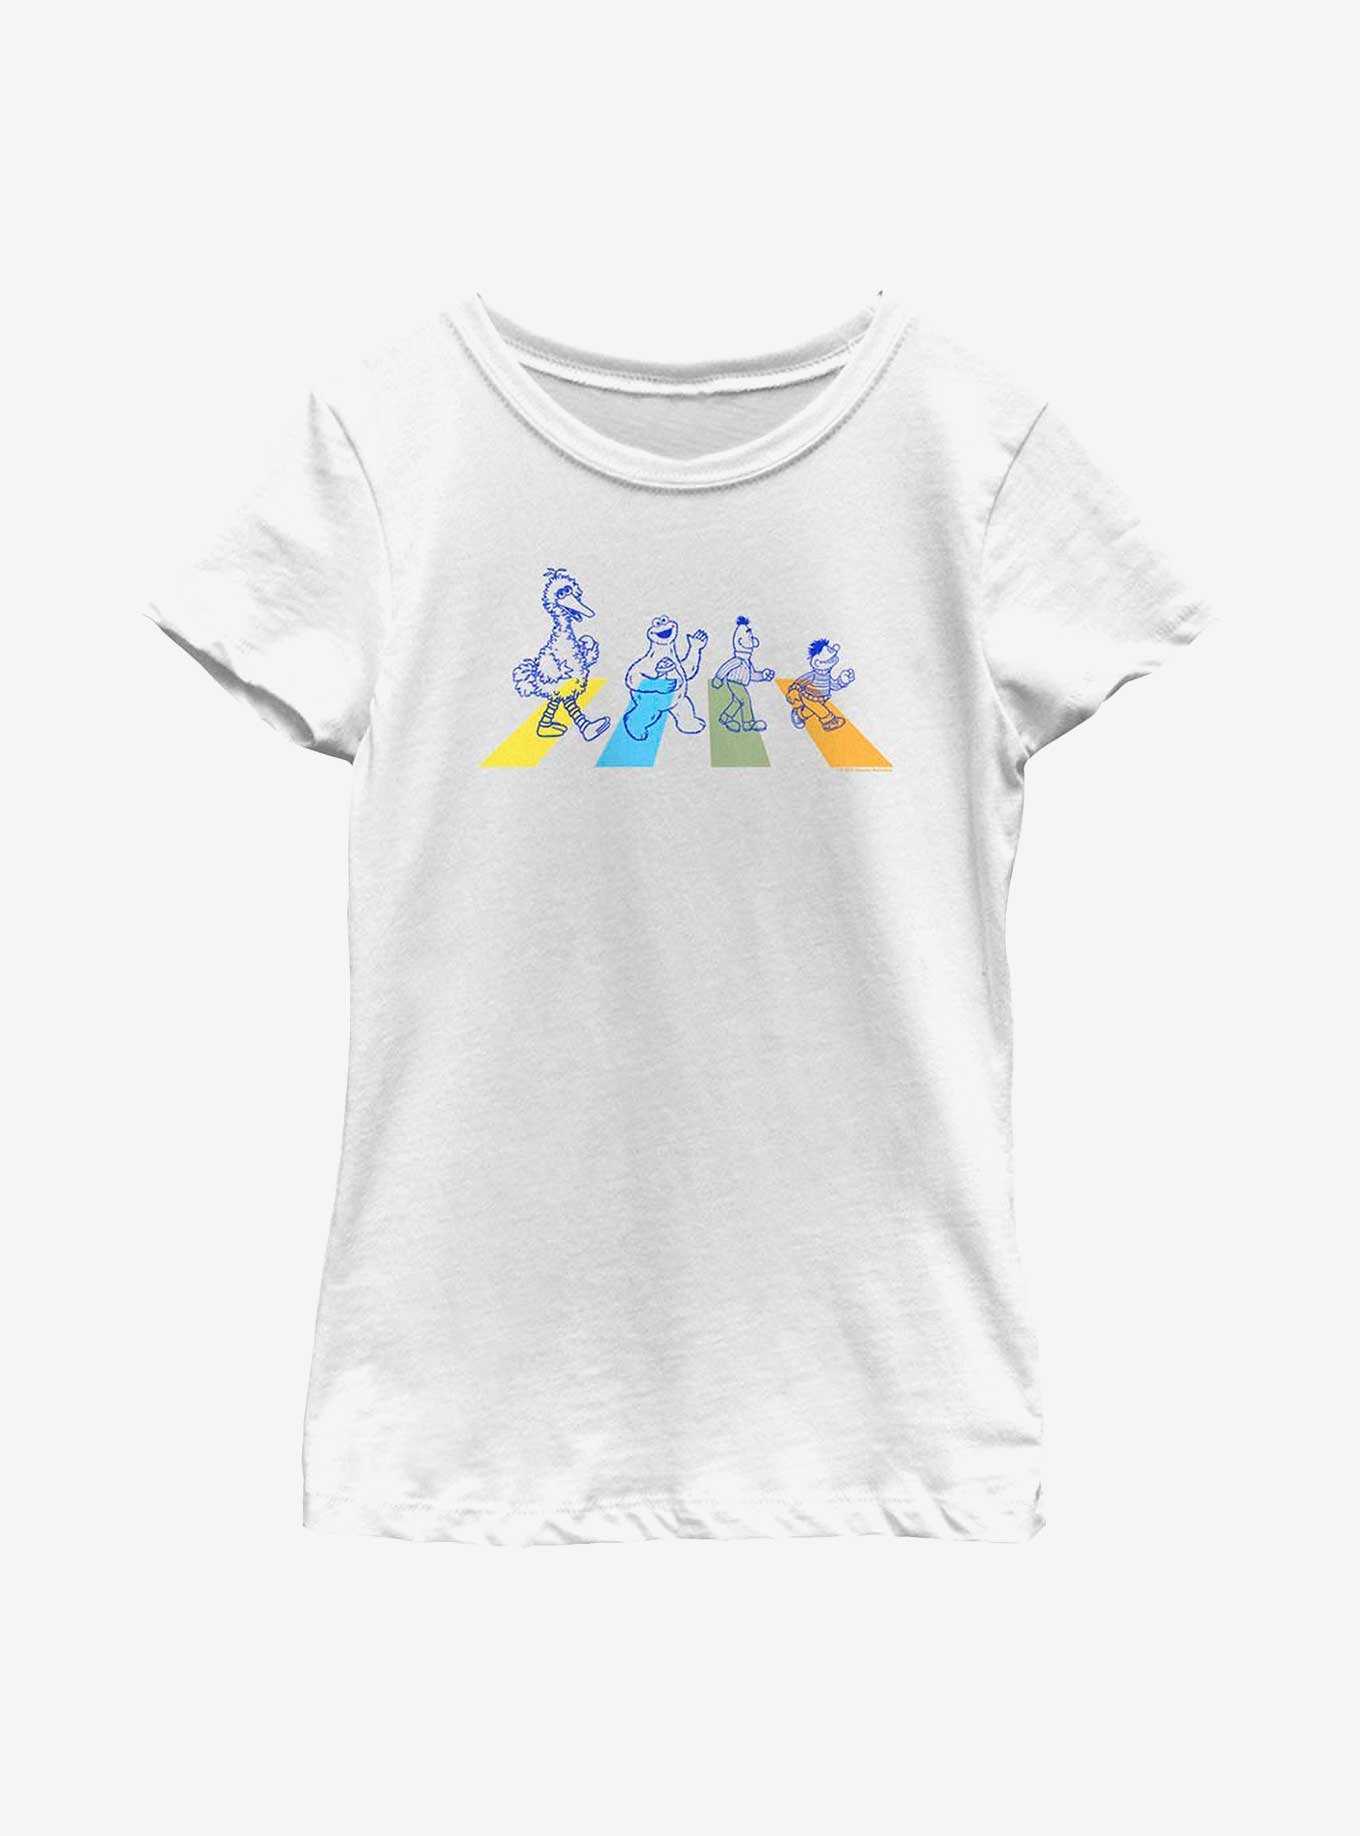 Sesame Street Team Abbey Road Youth Girls T-Shirt, , hi-res